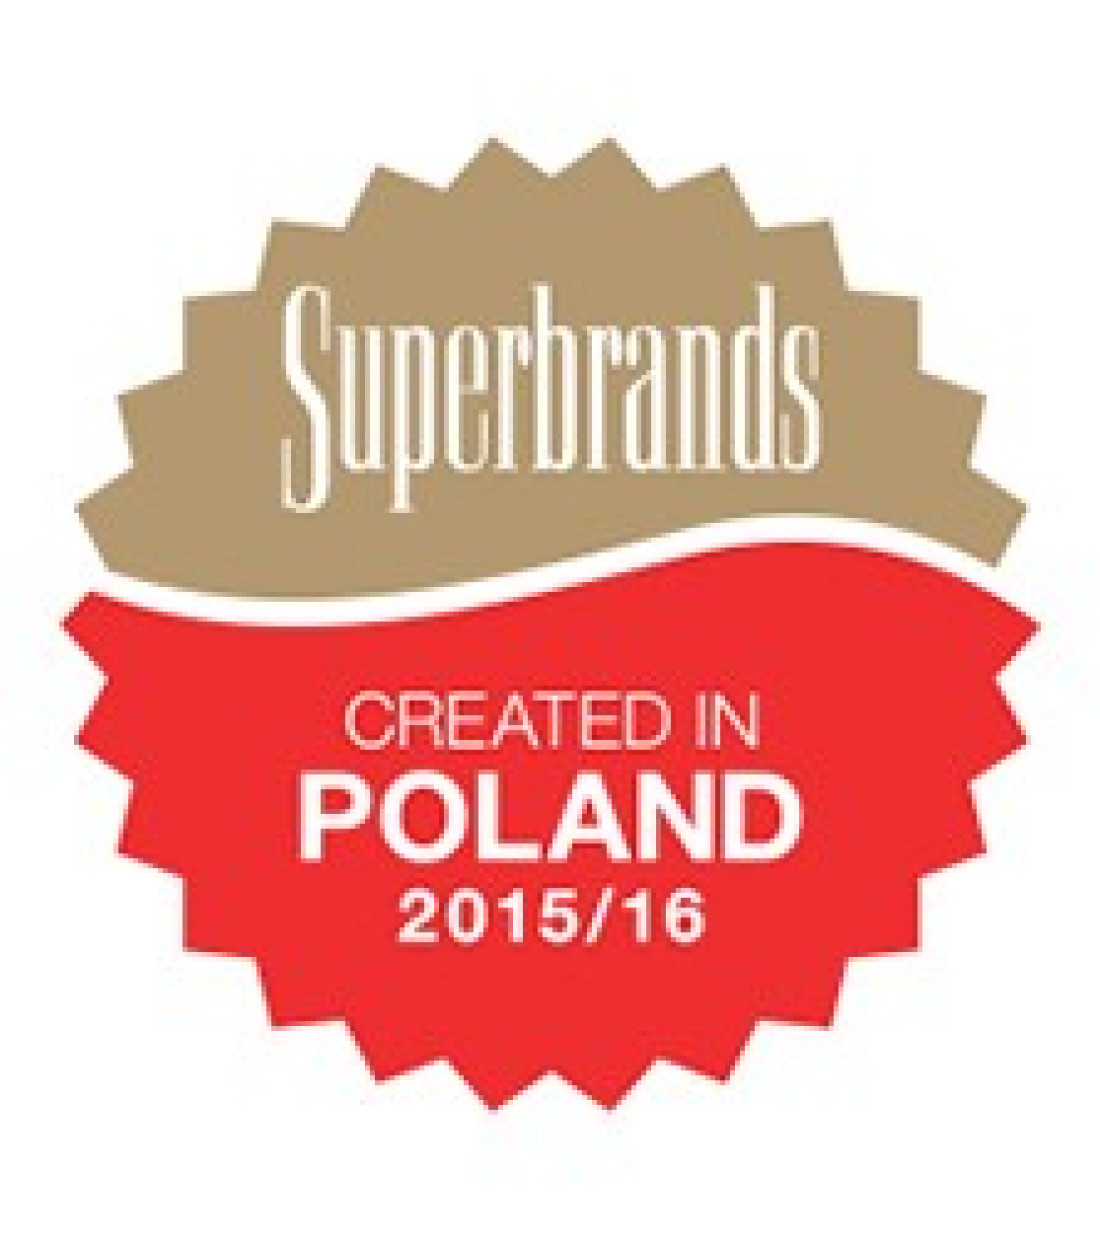 Marka Junkers otrzymała tytuł Superbrands 2015/16